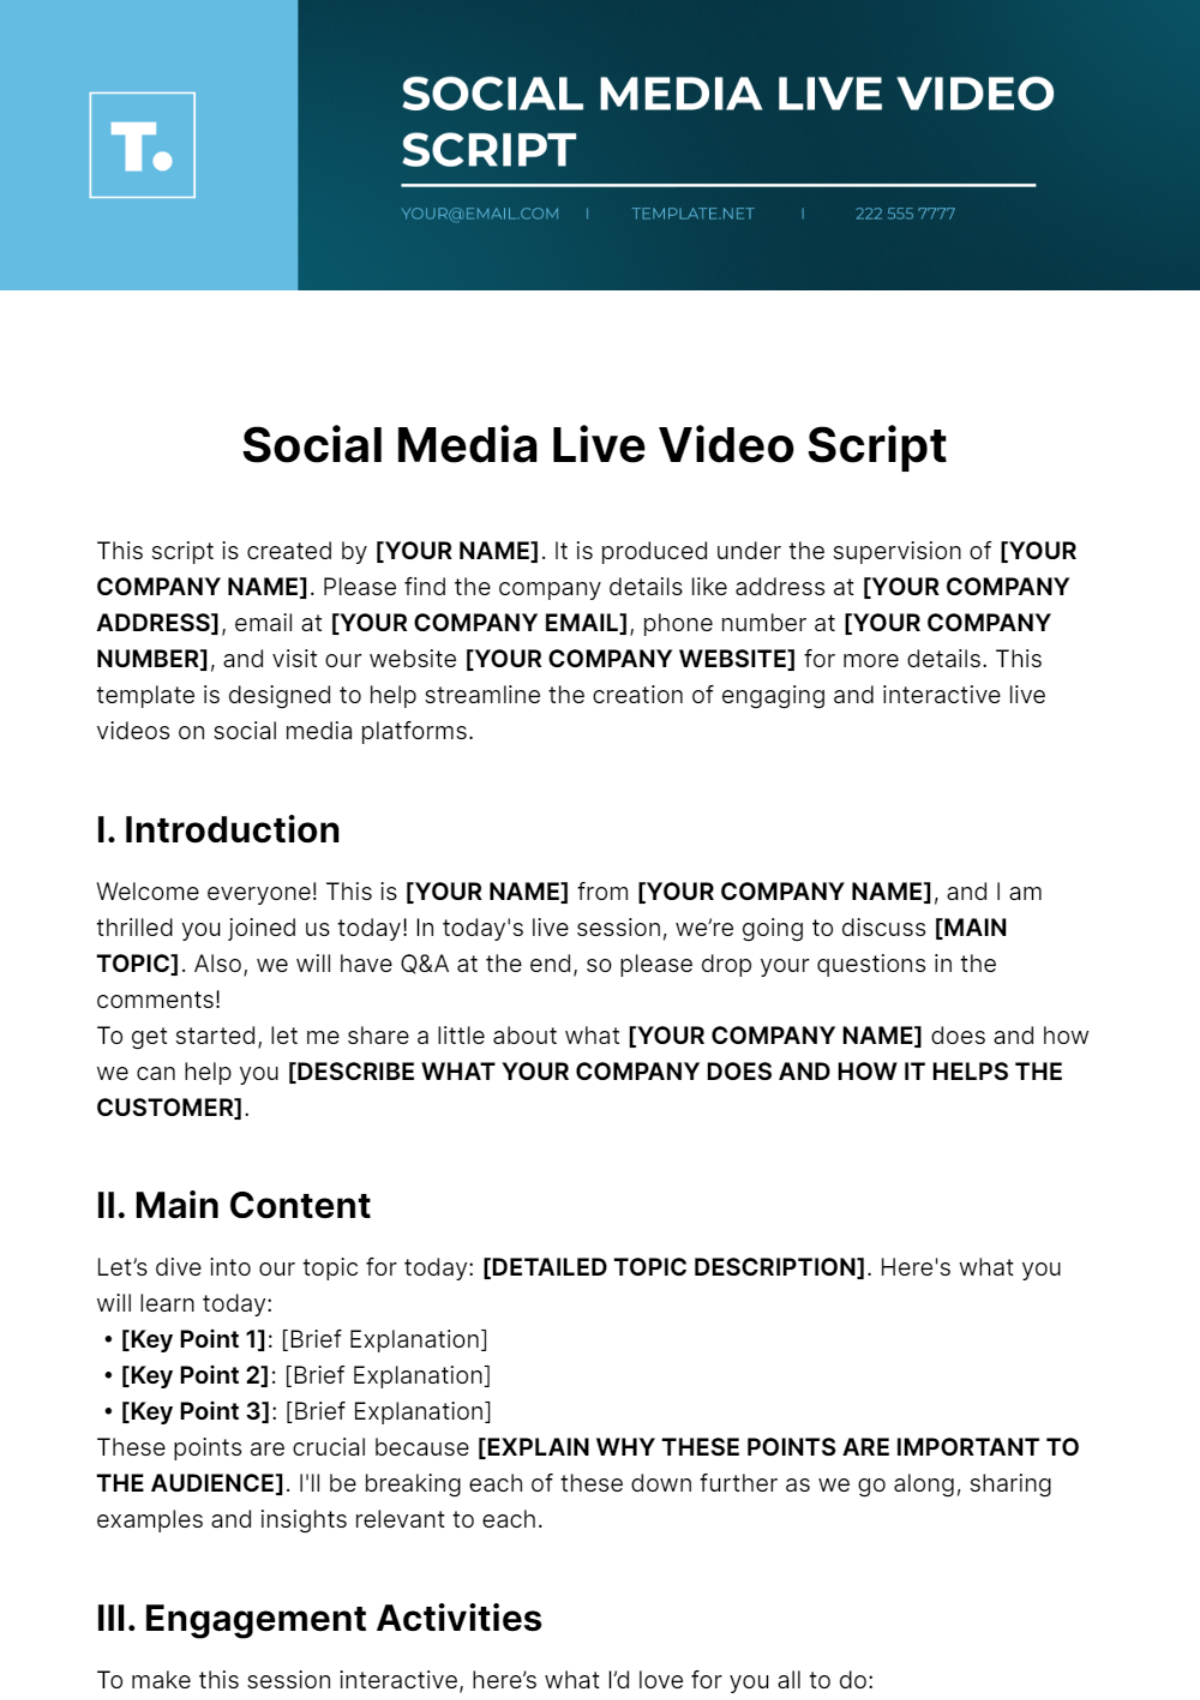 Social Media Live Video Script Template